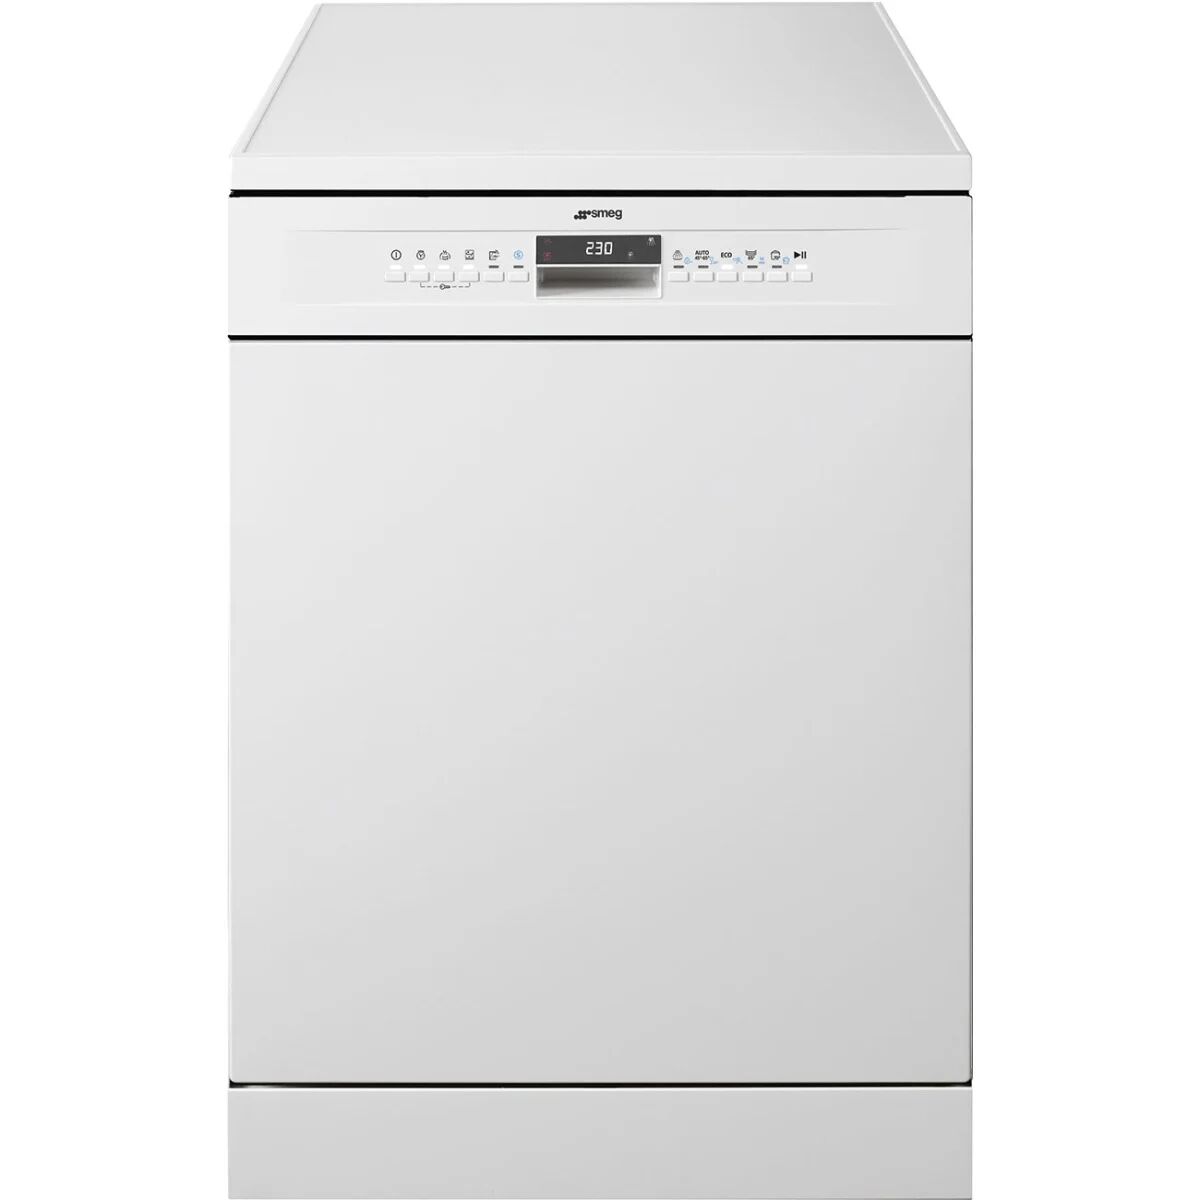 Smeg DF344BW 60cm White Freestanding Dishwasher - White